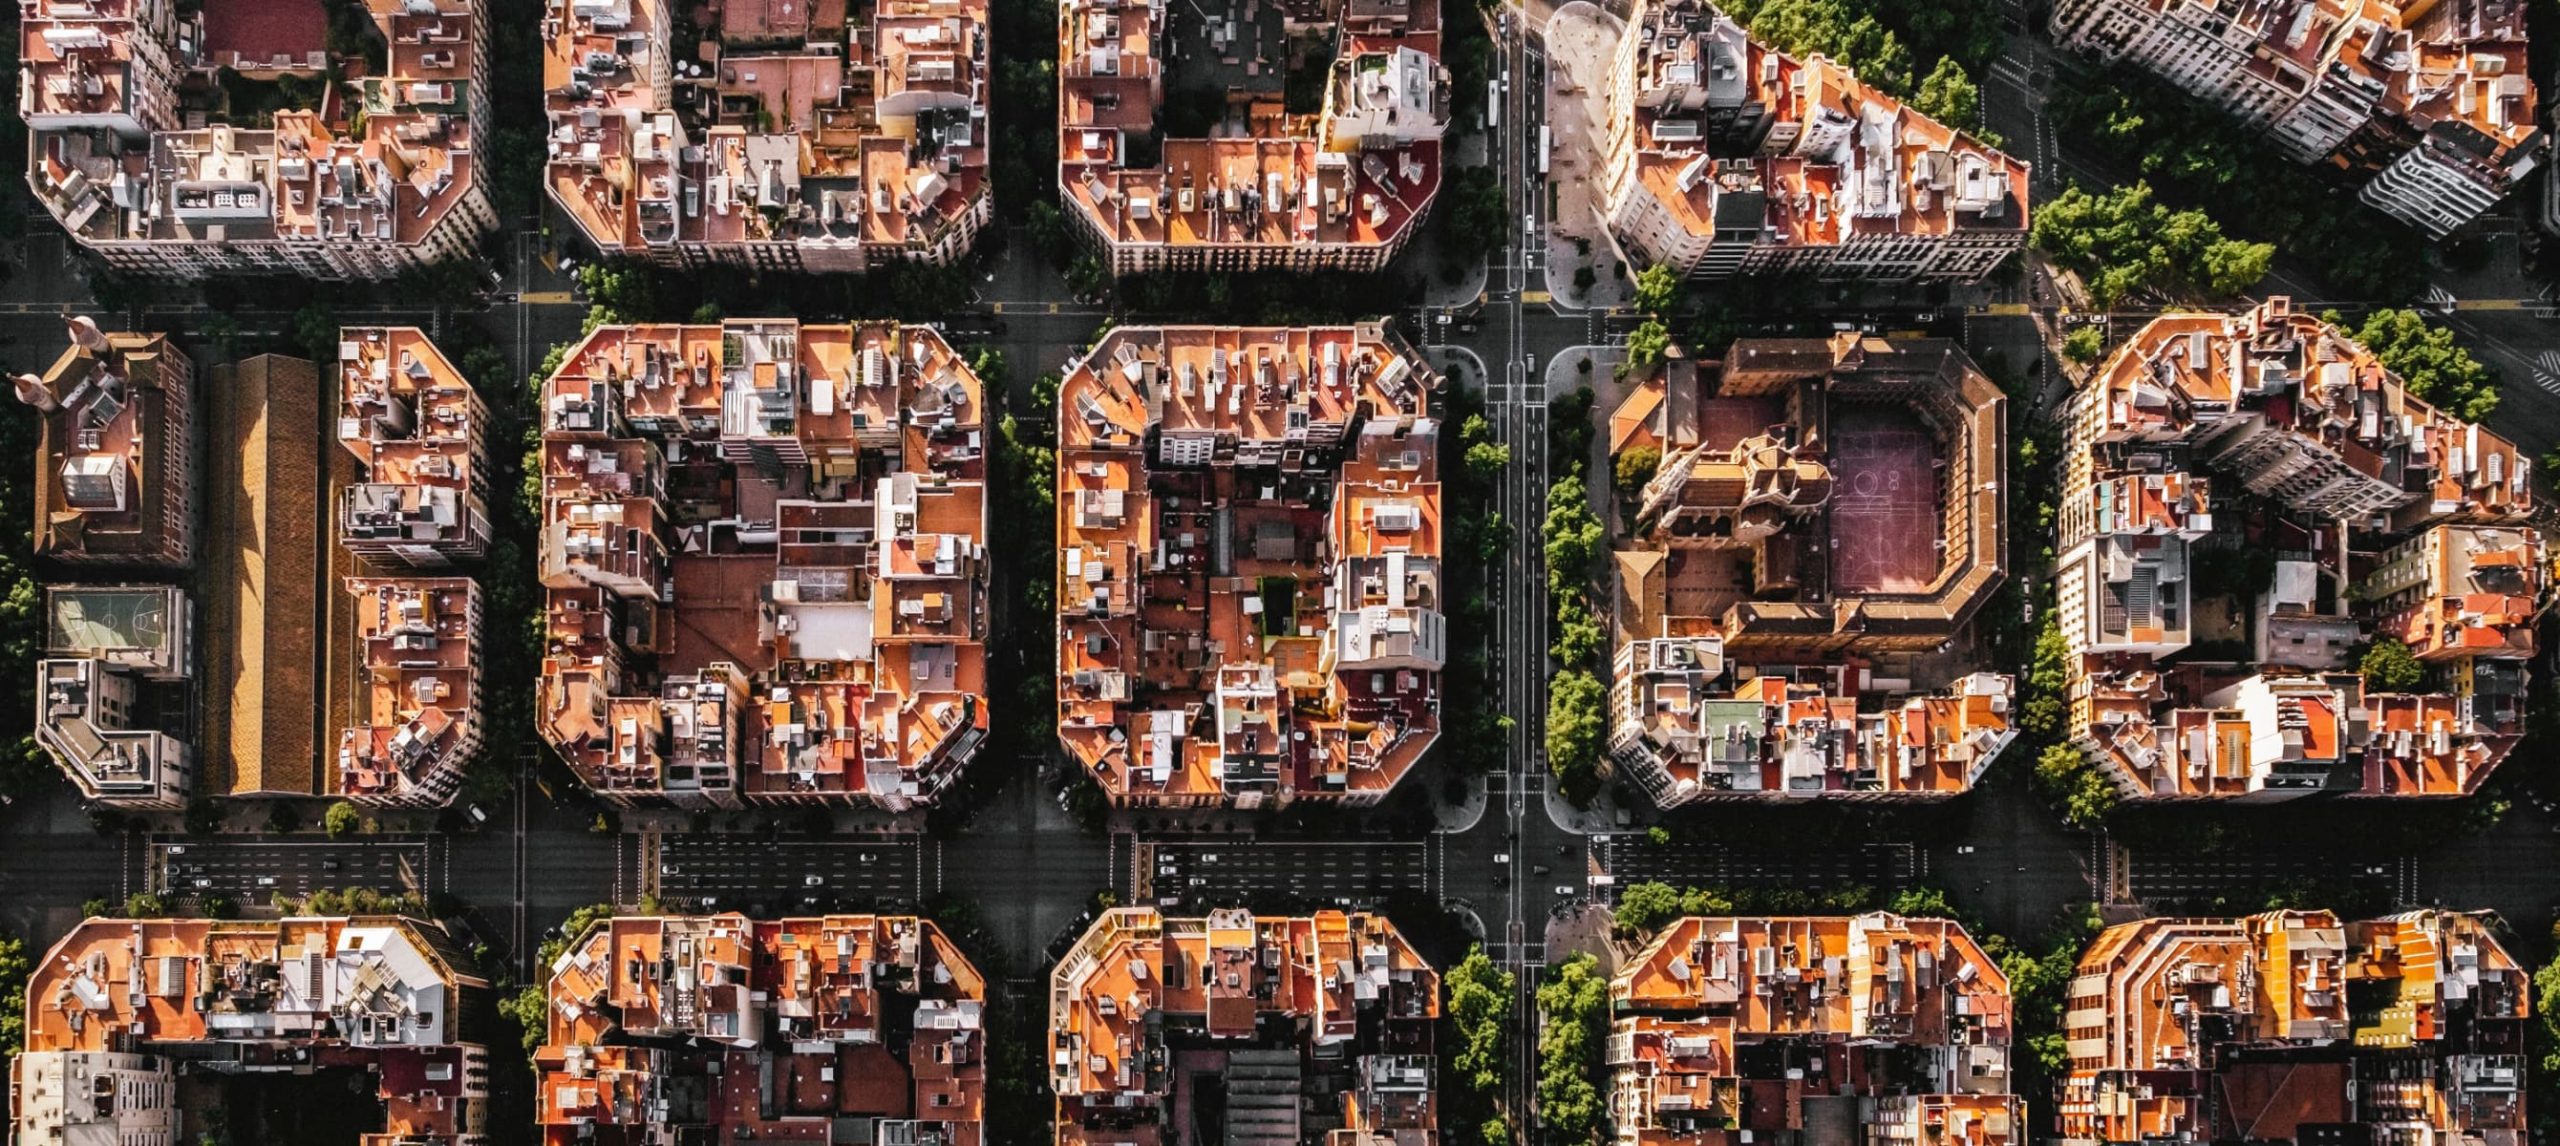 Top view of the Eixample neighborhood, in Barcelona, Spain.